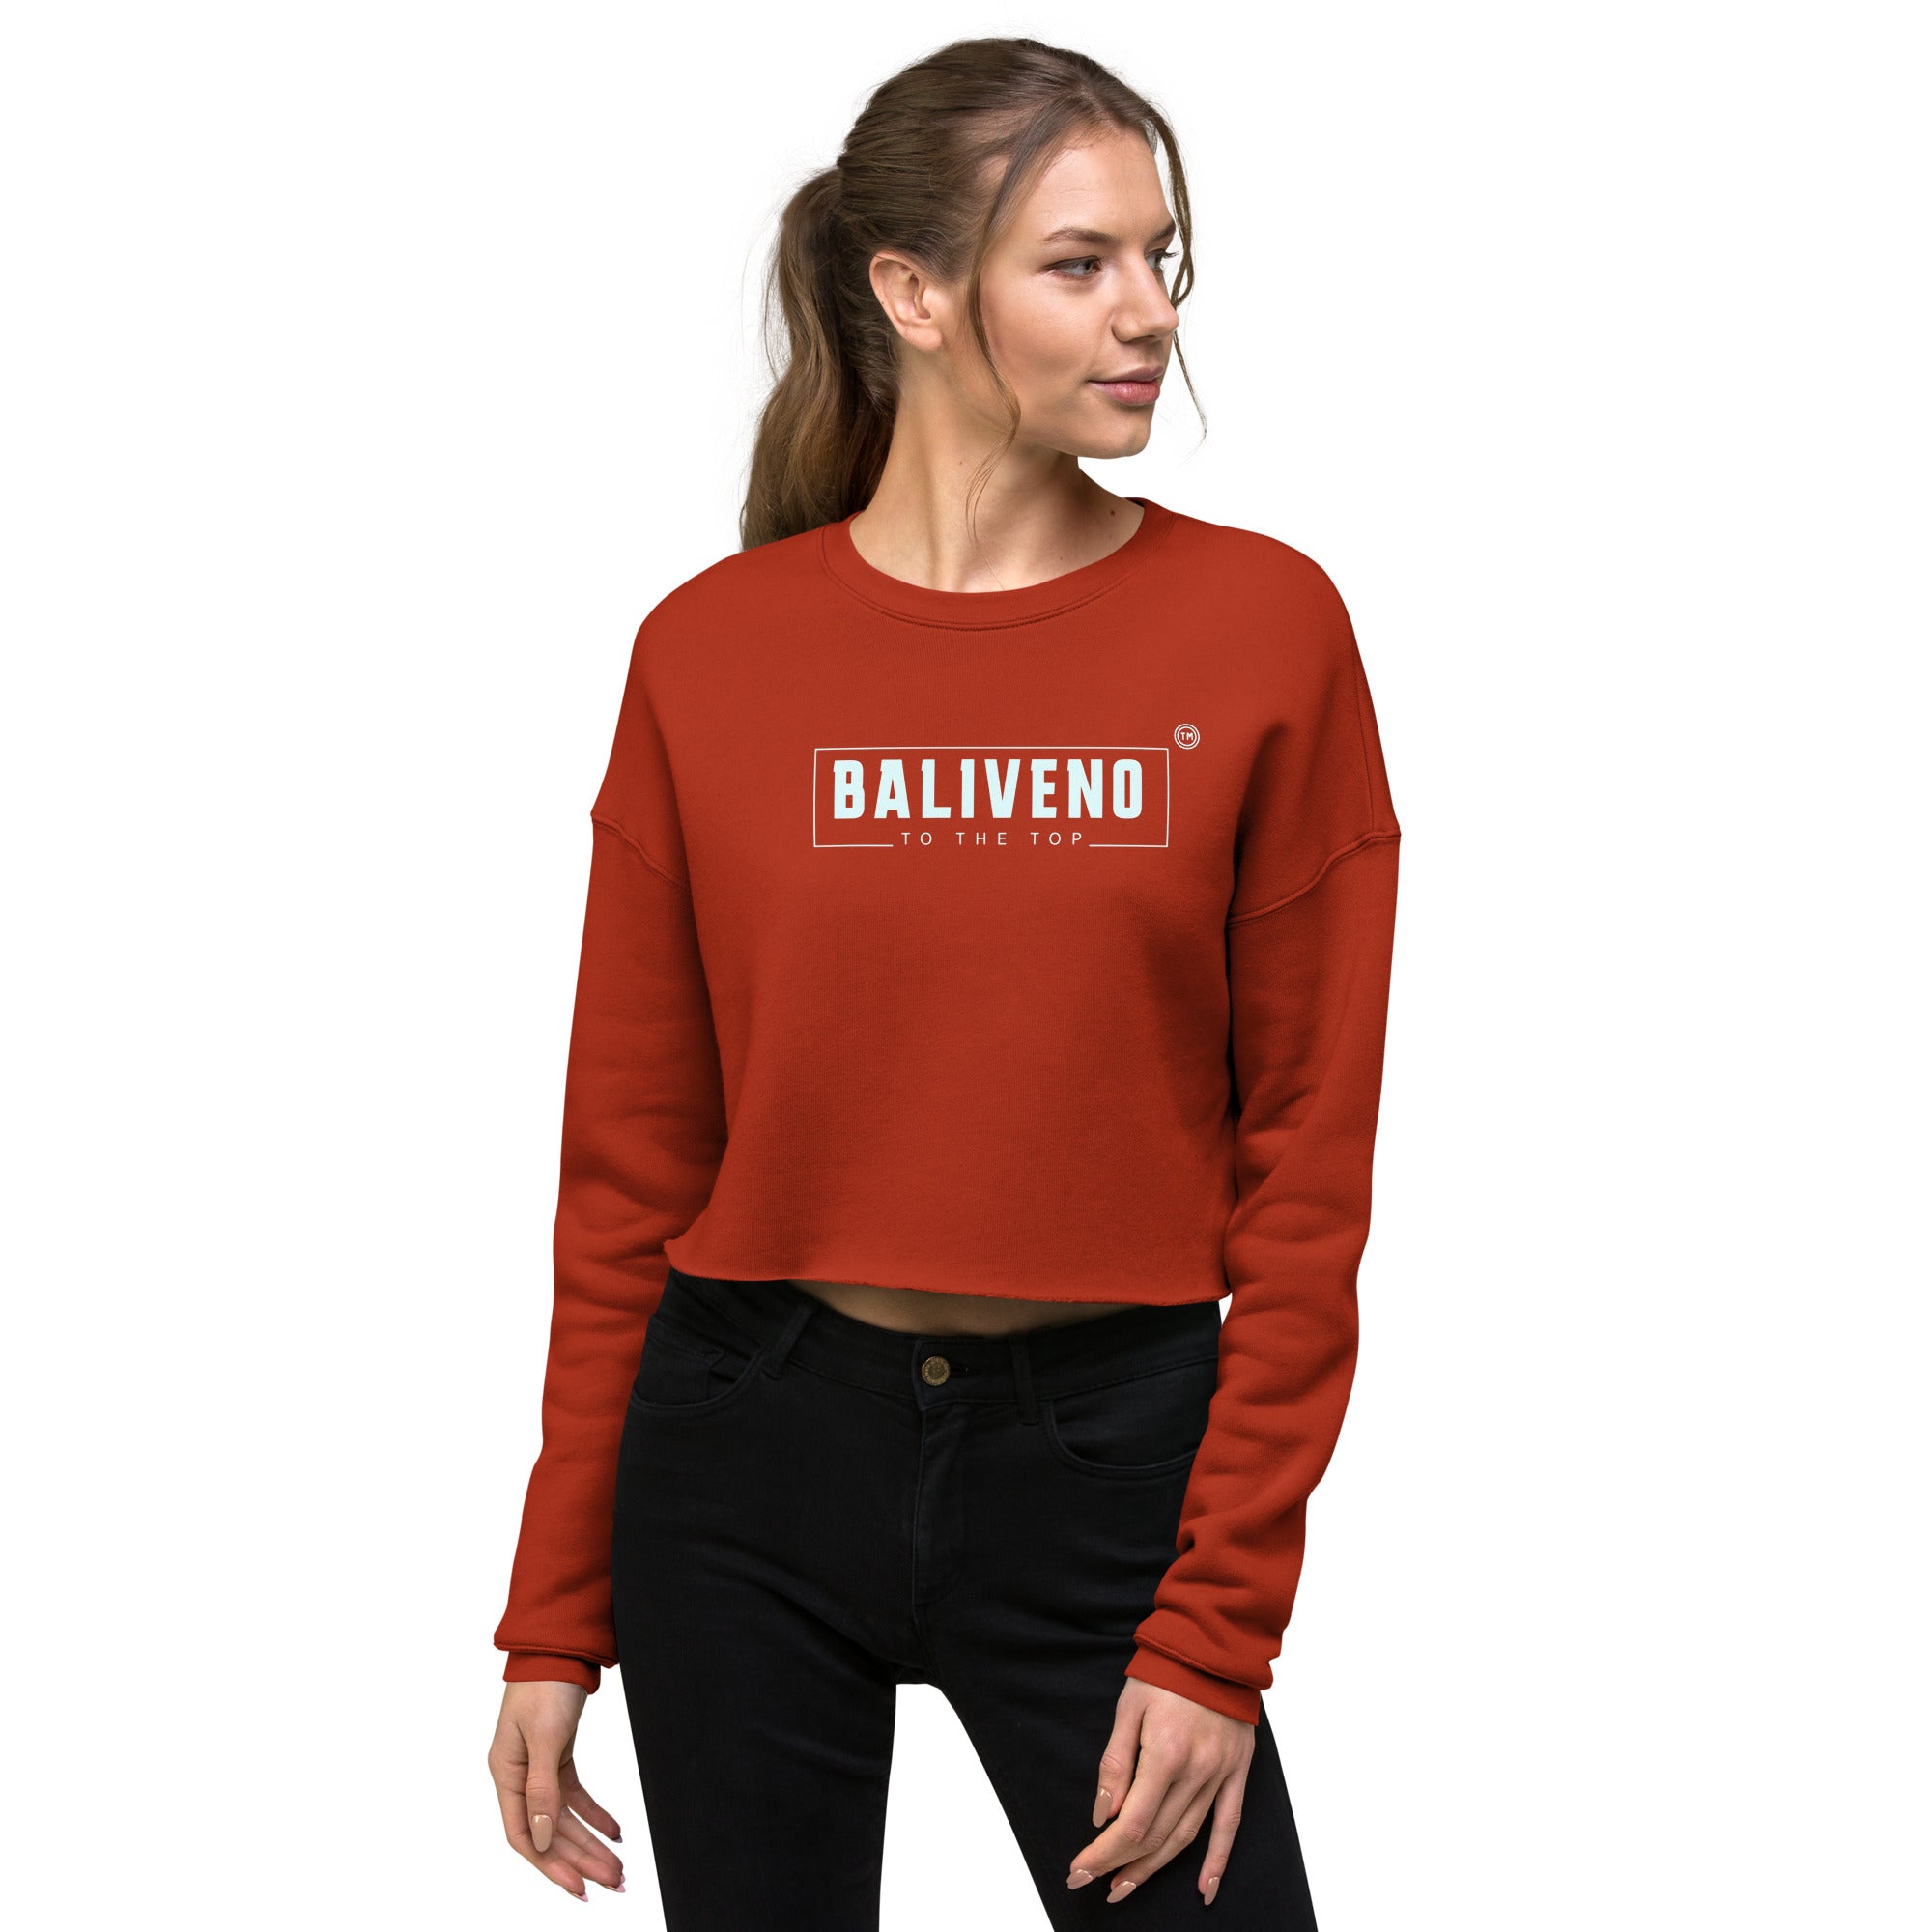 Baliveno Women’s Cropped Sweatshirt, Printed Sweatshirt, Baliveno Fashion, Cotton Sweatshirt,